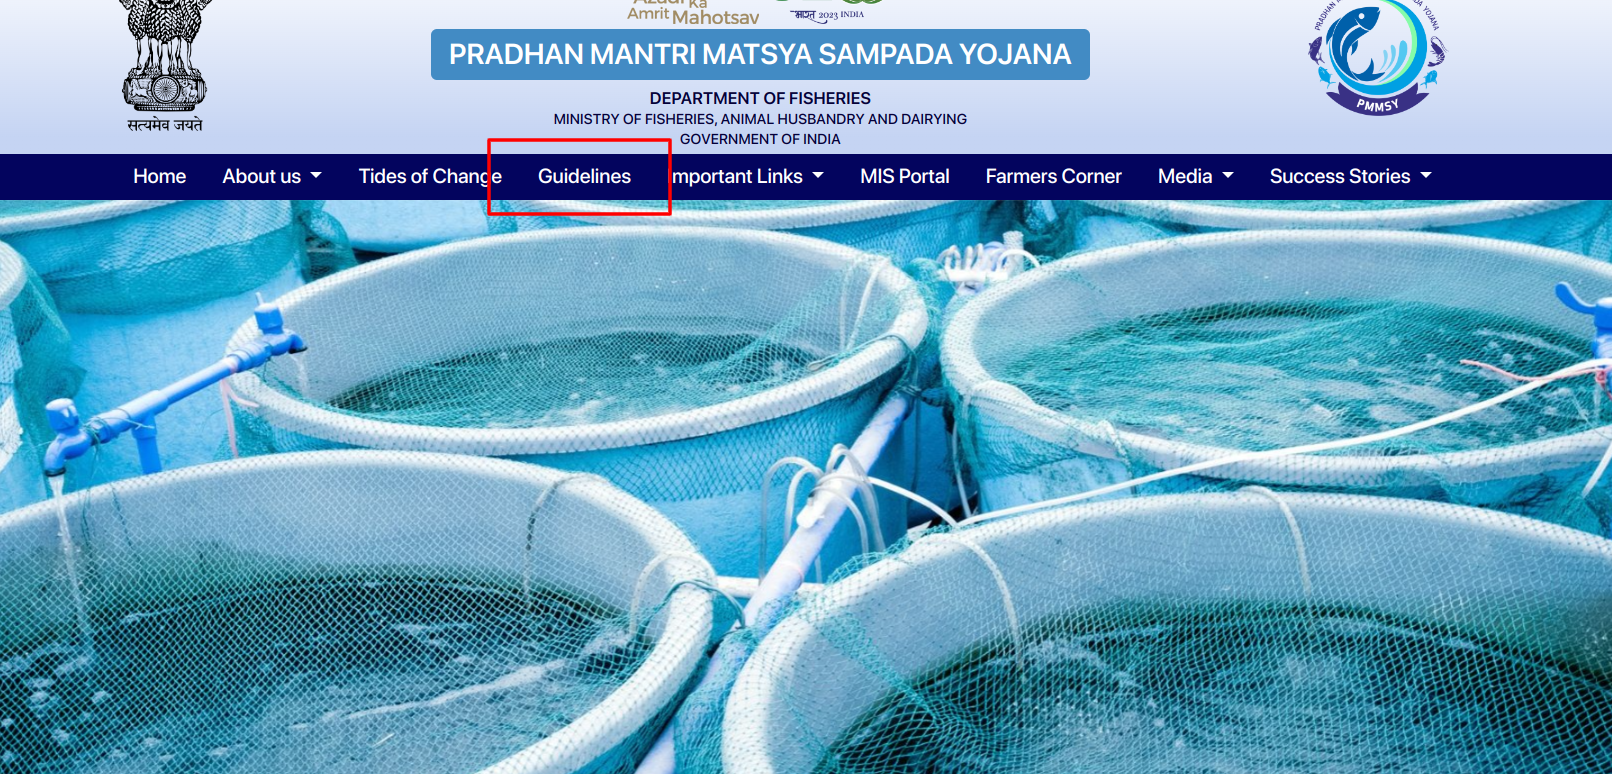 प्रधानमंत्री मत्स्य संपदा योजना 2023 | (PMMSY) PM Matsya Sampada, ऑनलाइन आवेदन फॉर्म